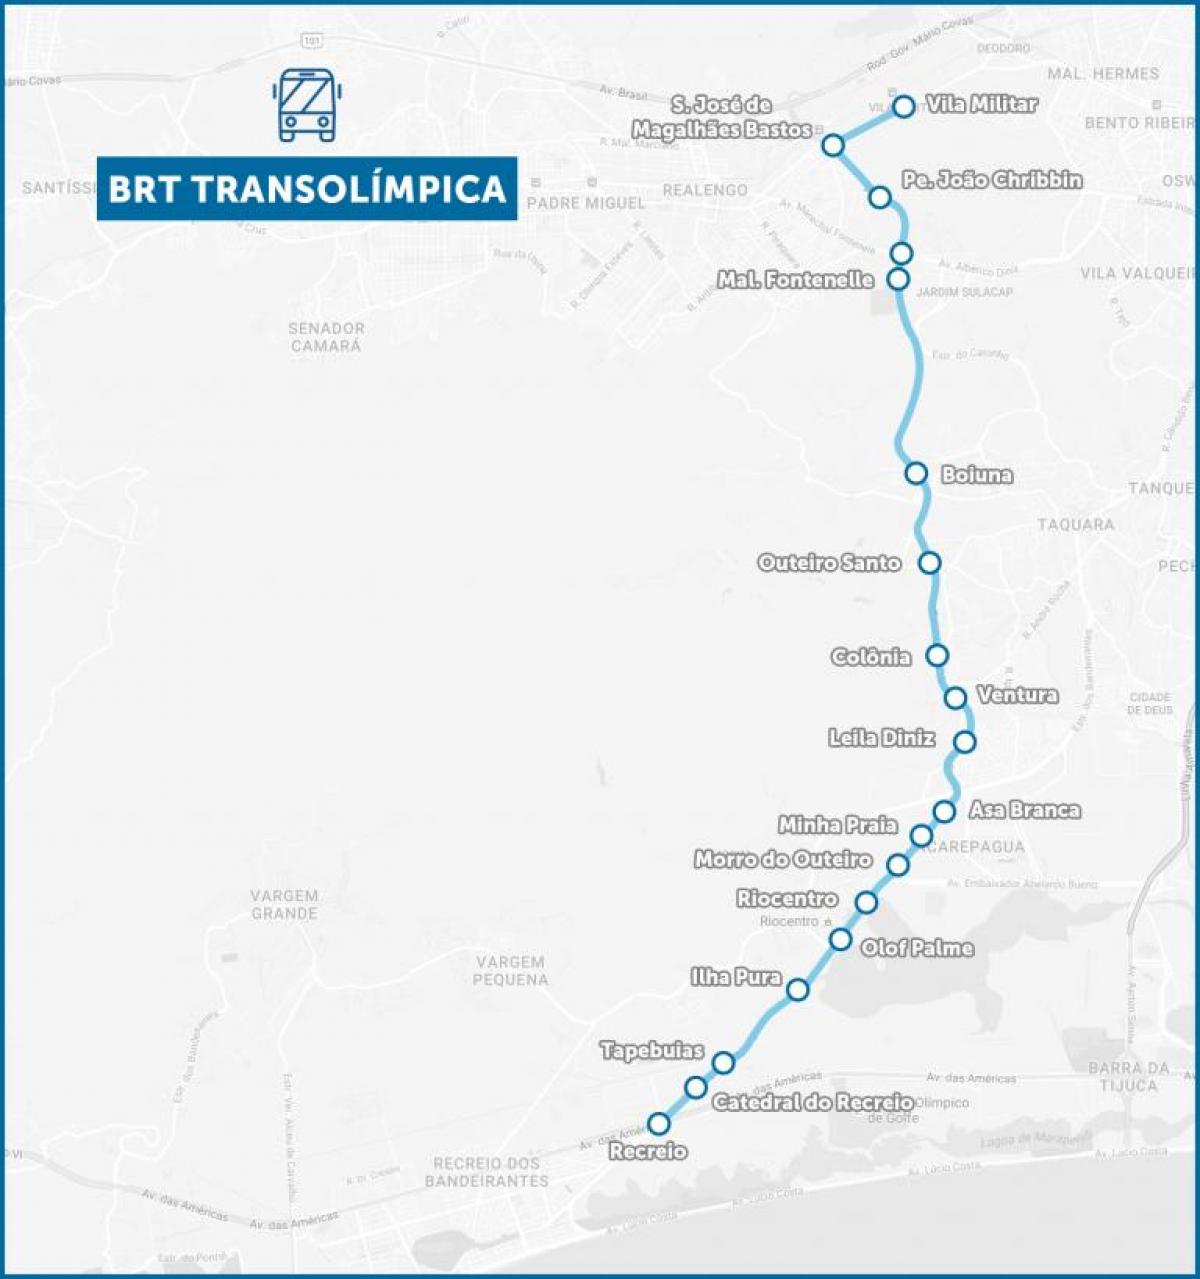 नक्शे के BRT TransOlimpica